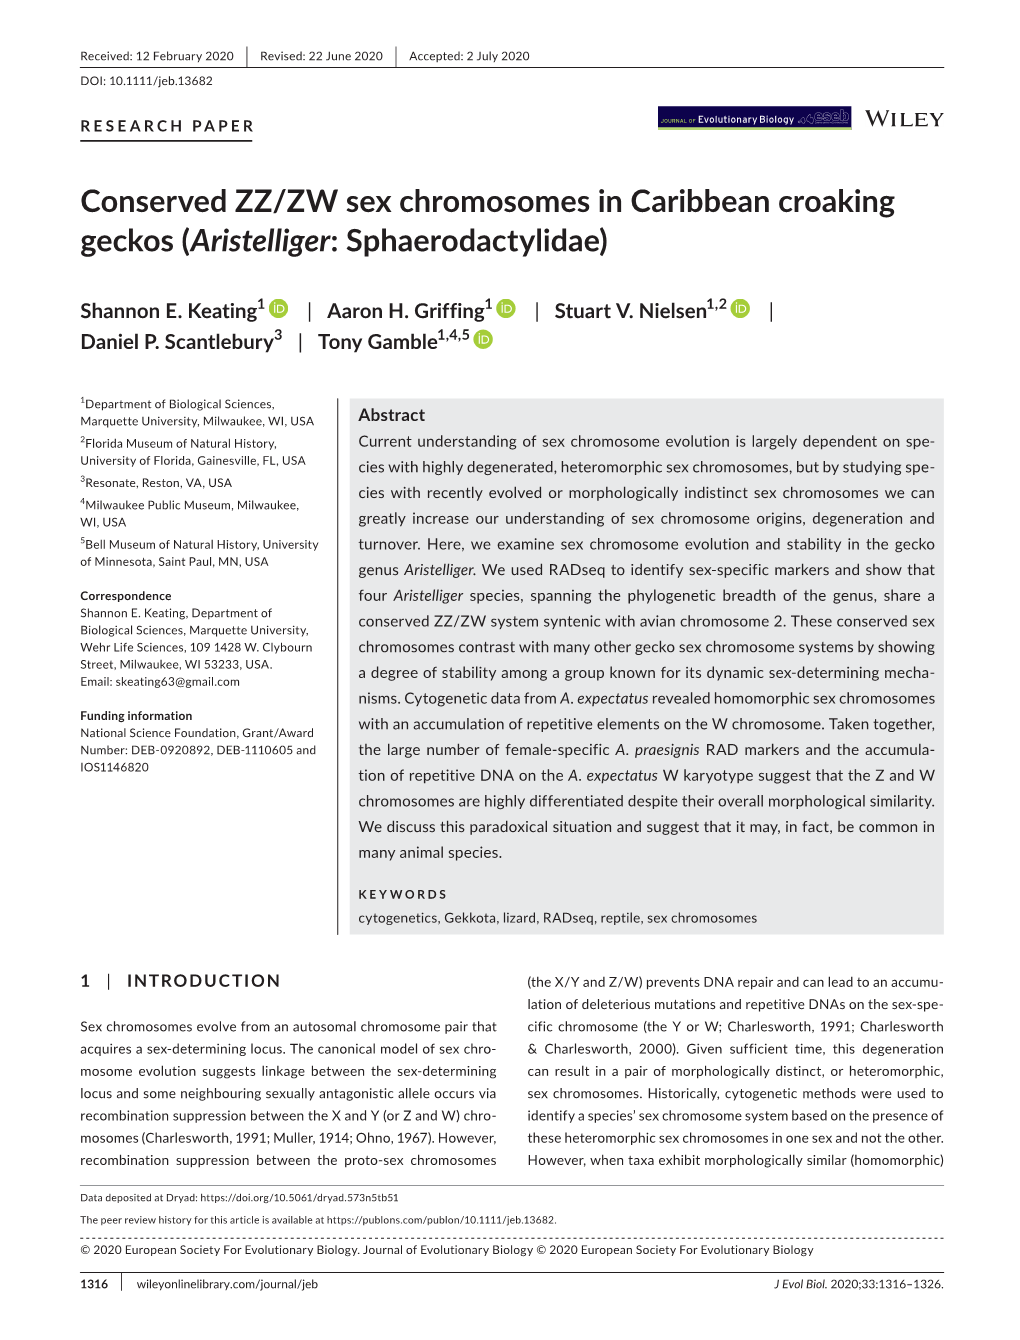 Conserved ZZ/ZW Sex Chromosomes in Caribbean Croaking Geckos (Aristelliger: Sphaerodactylidae)